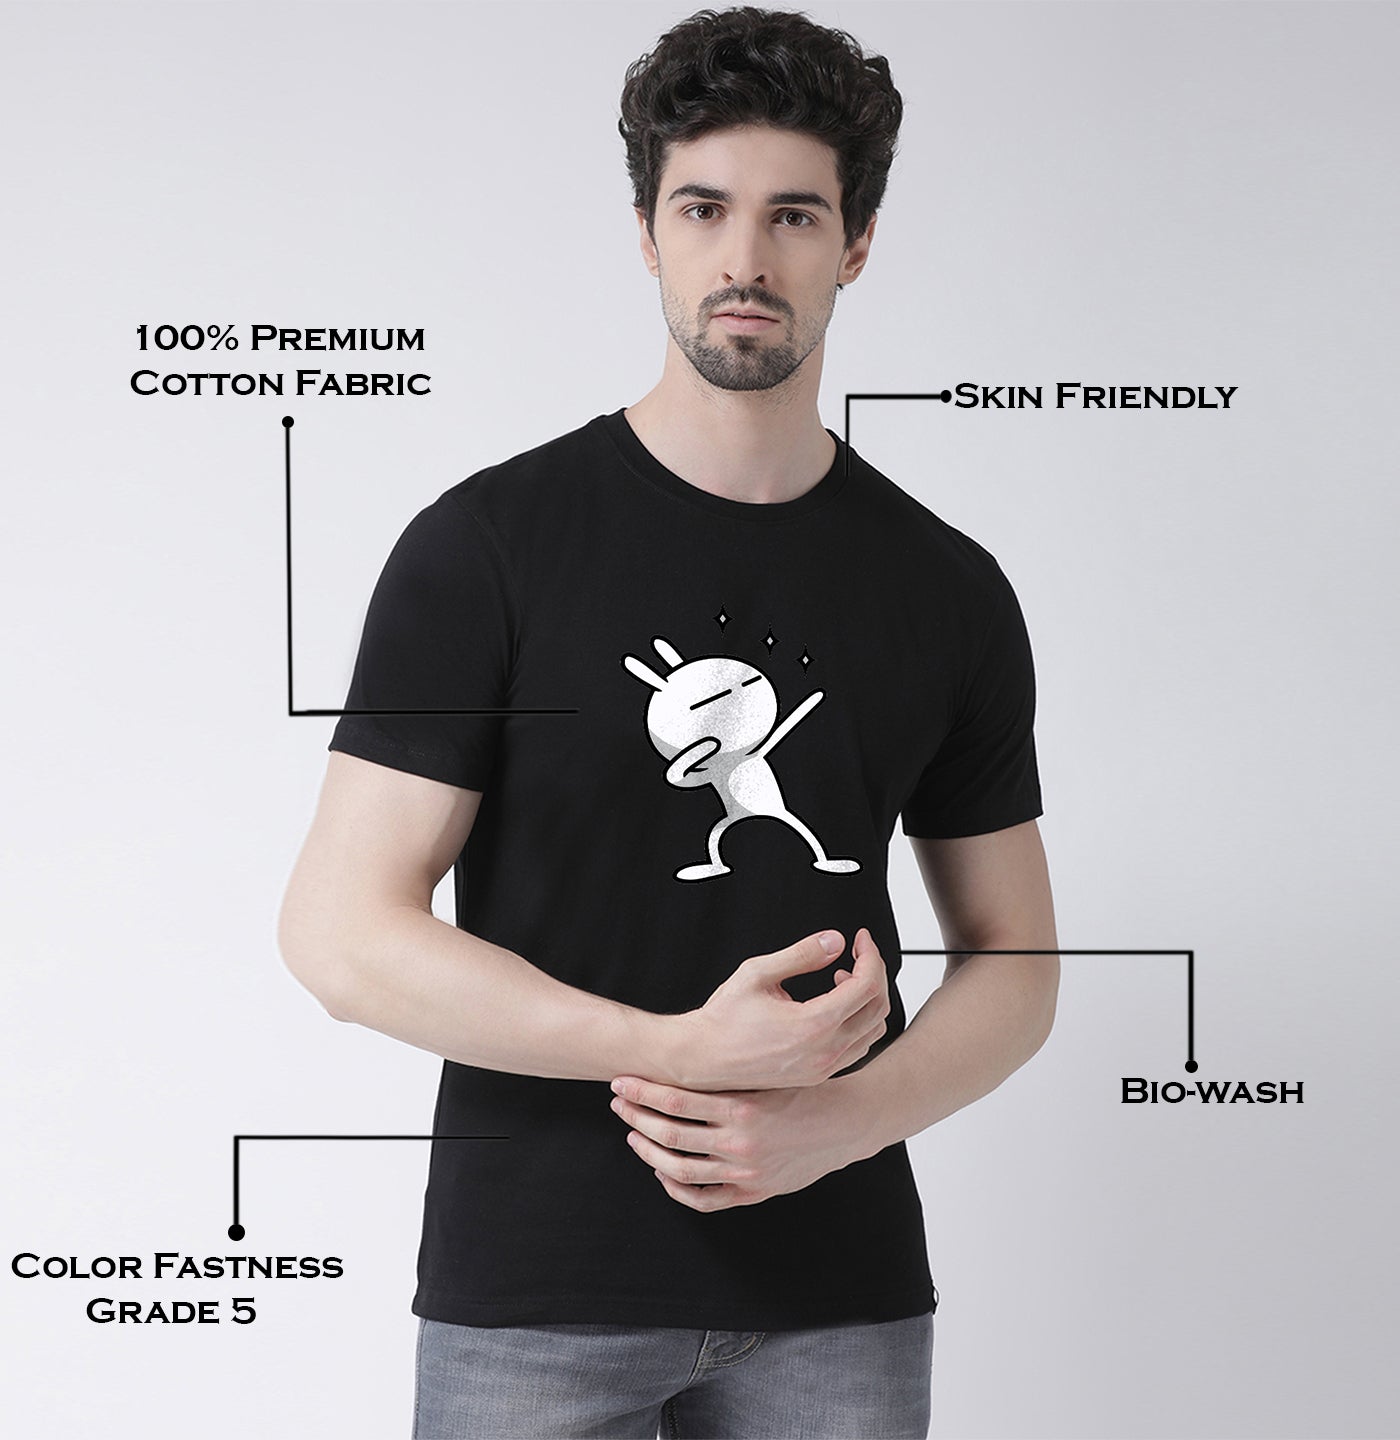 Men's Pack Of 2 Black & Turquiose Printed Half Sleeves T-Shirt - Friskers